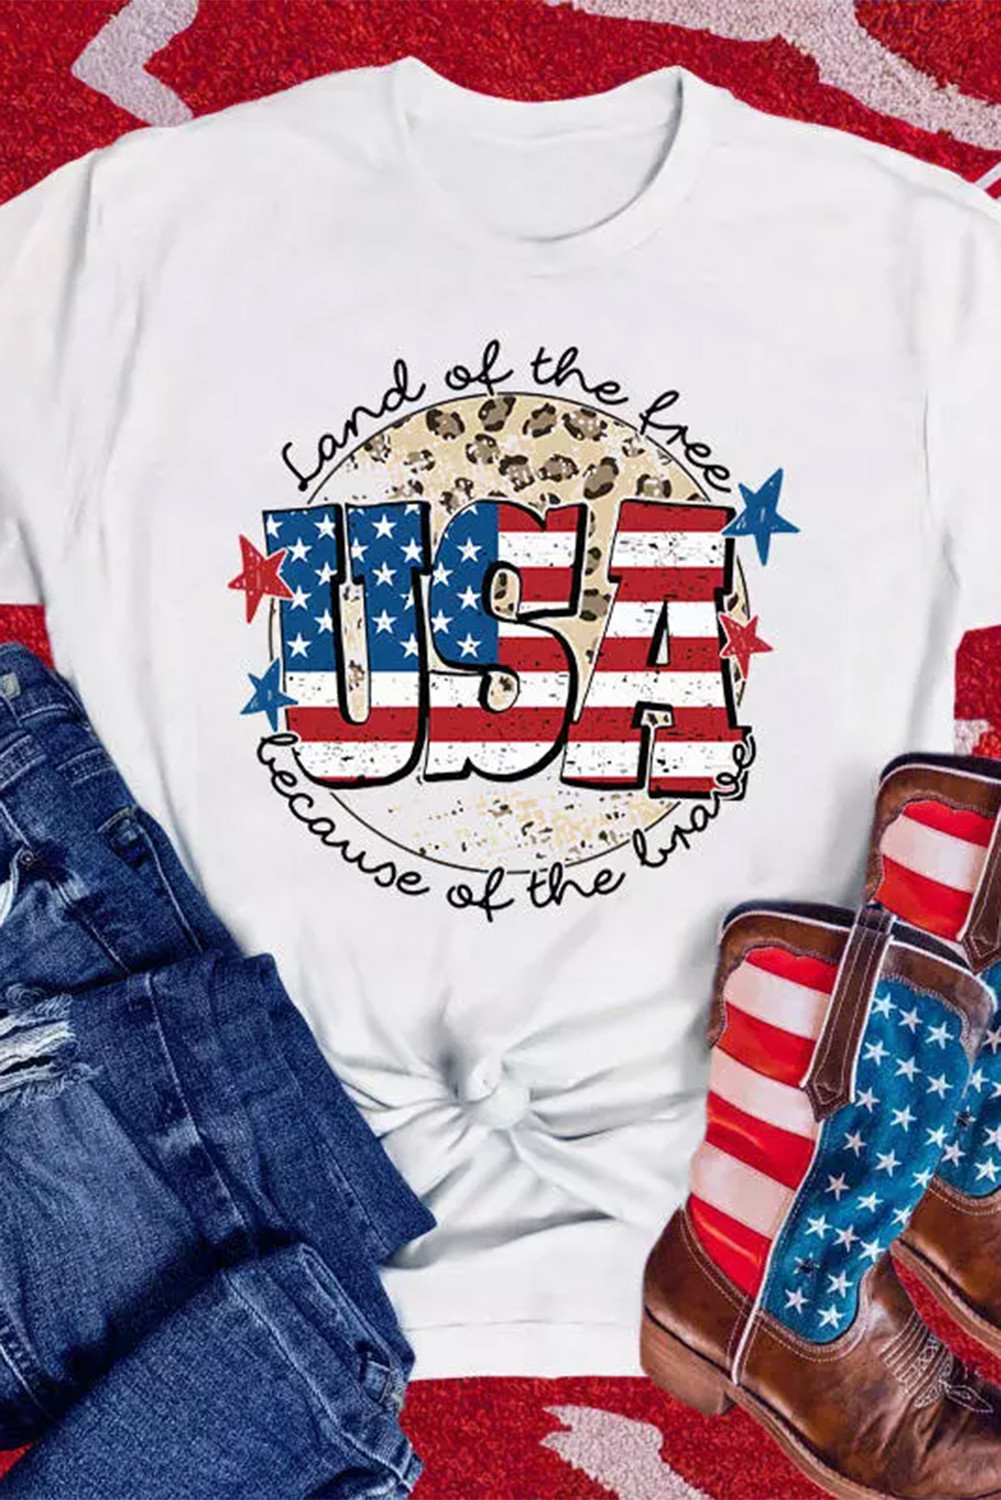 白色美国国旗标语图案印花短袖 T 恤 LC25221420